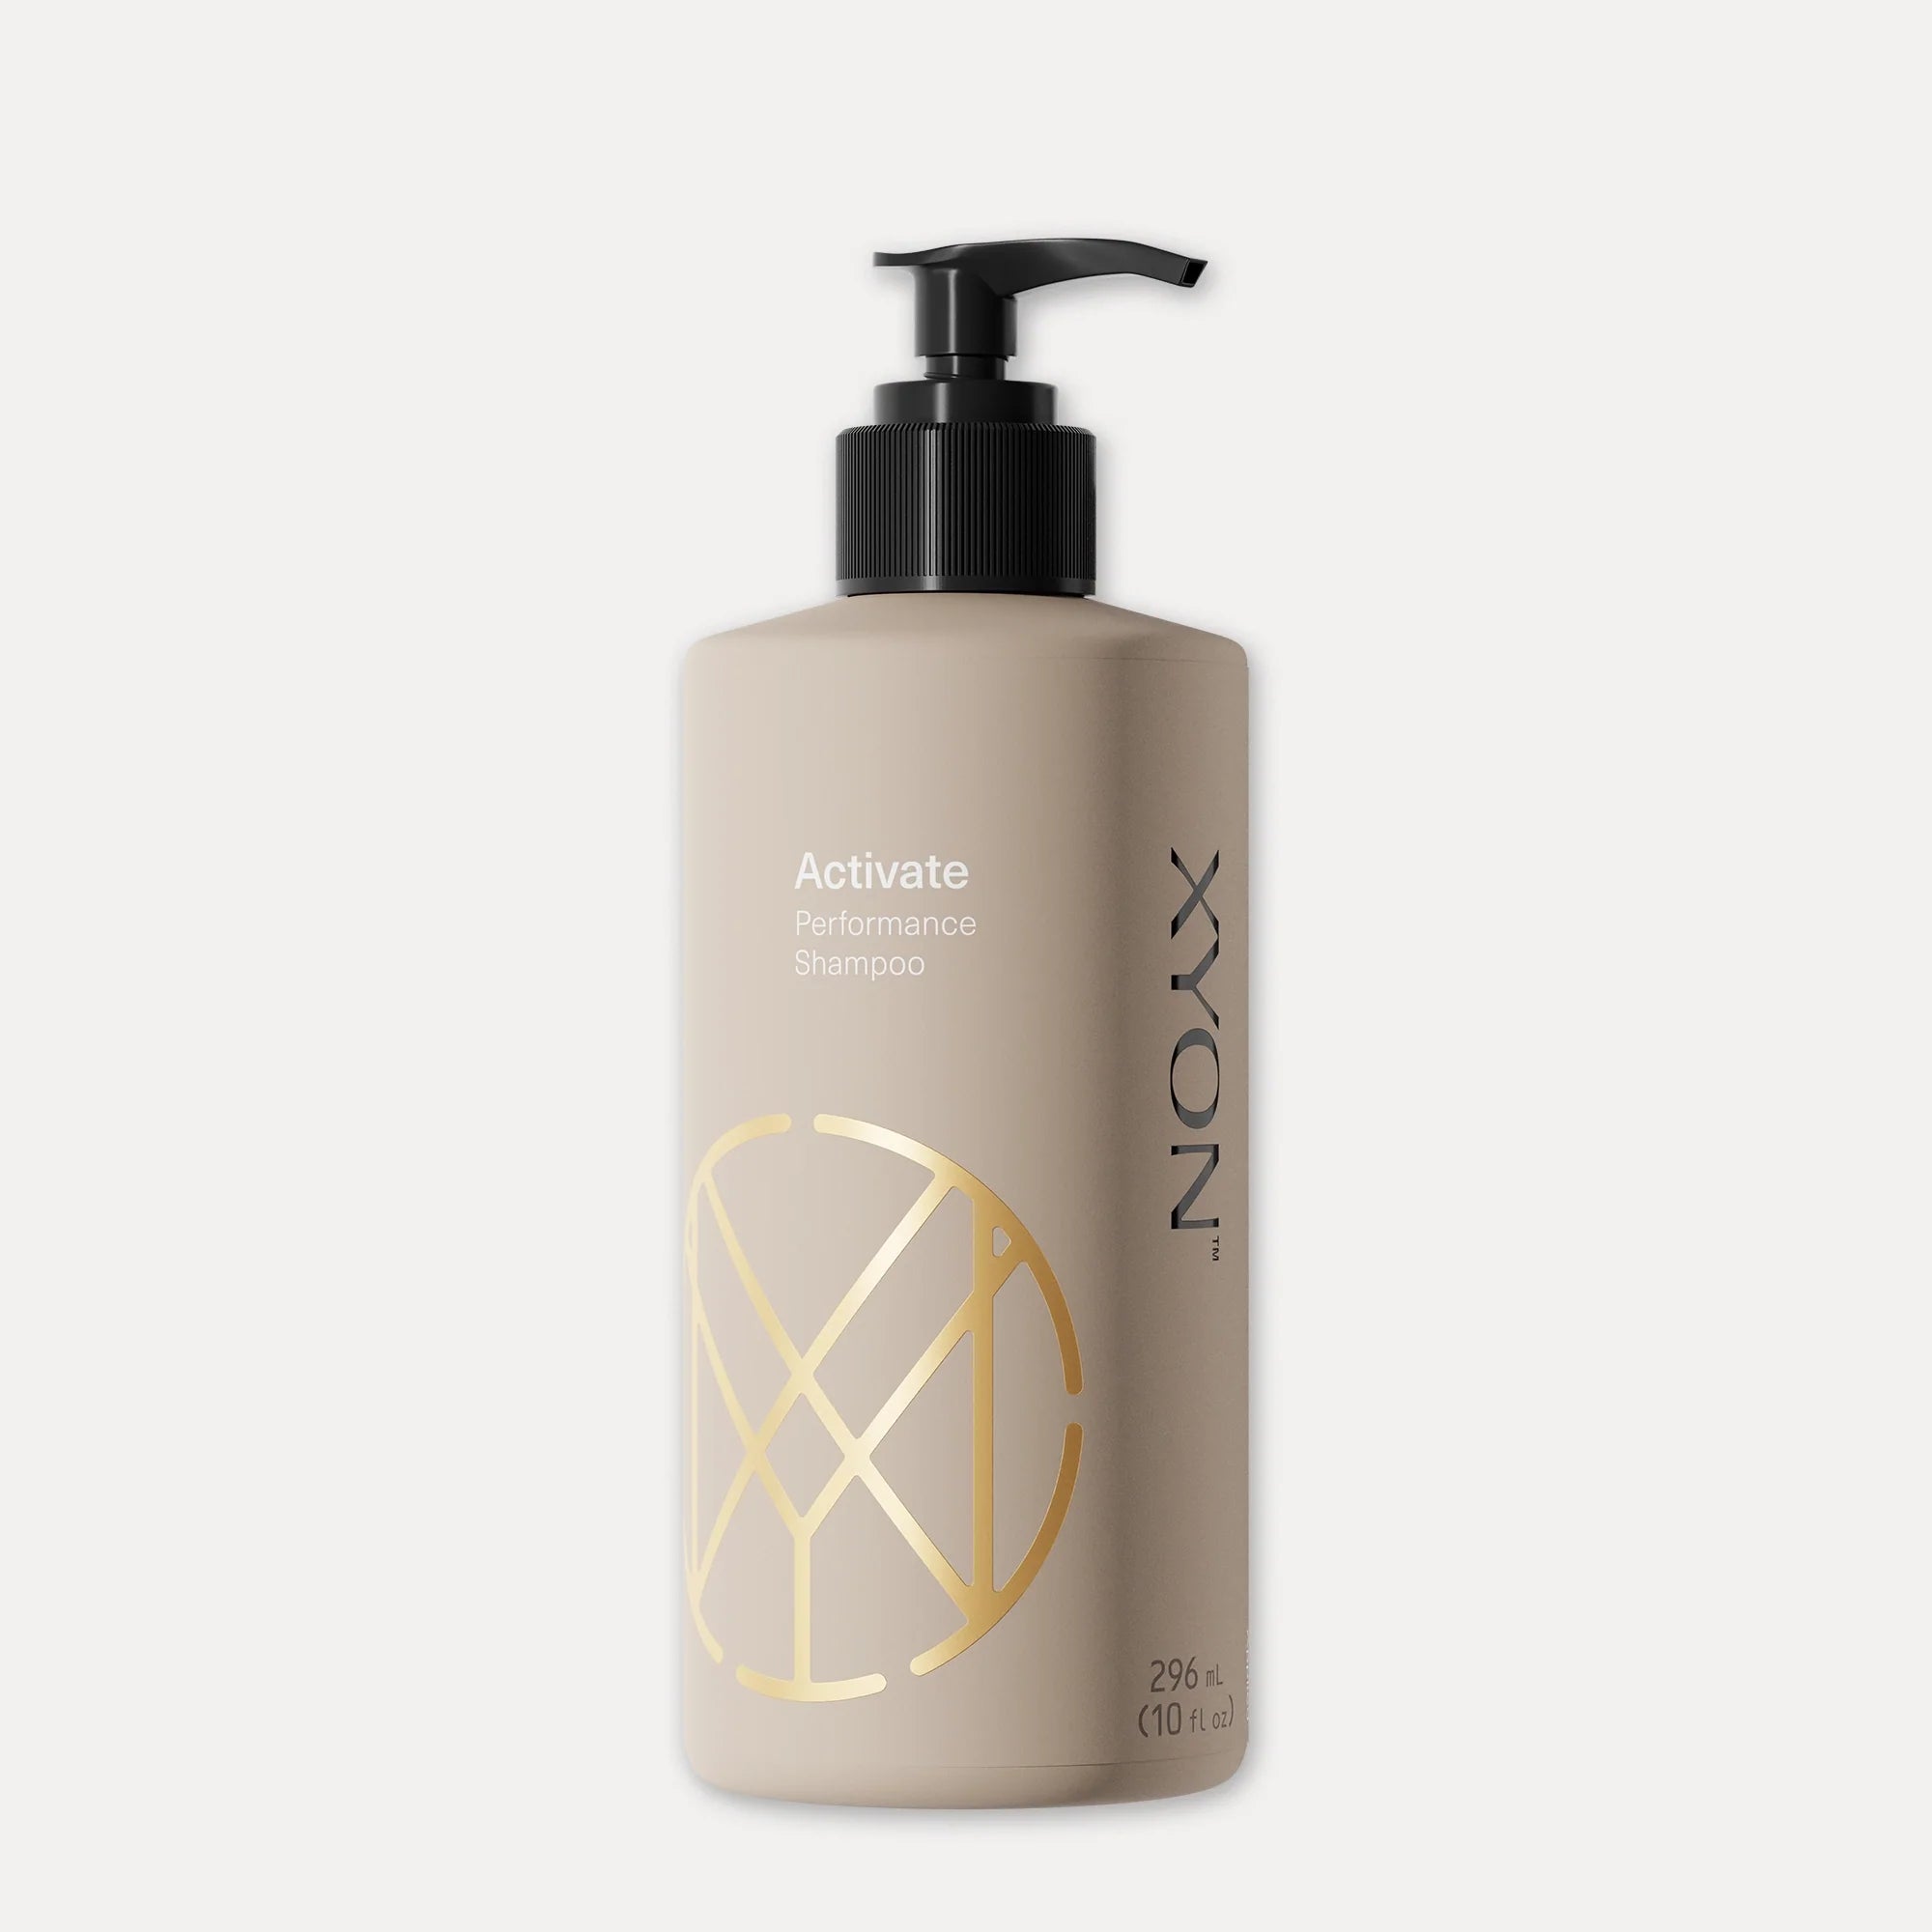 Activate Performance Shampoo